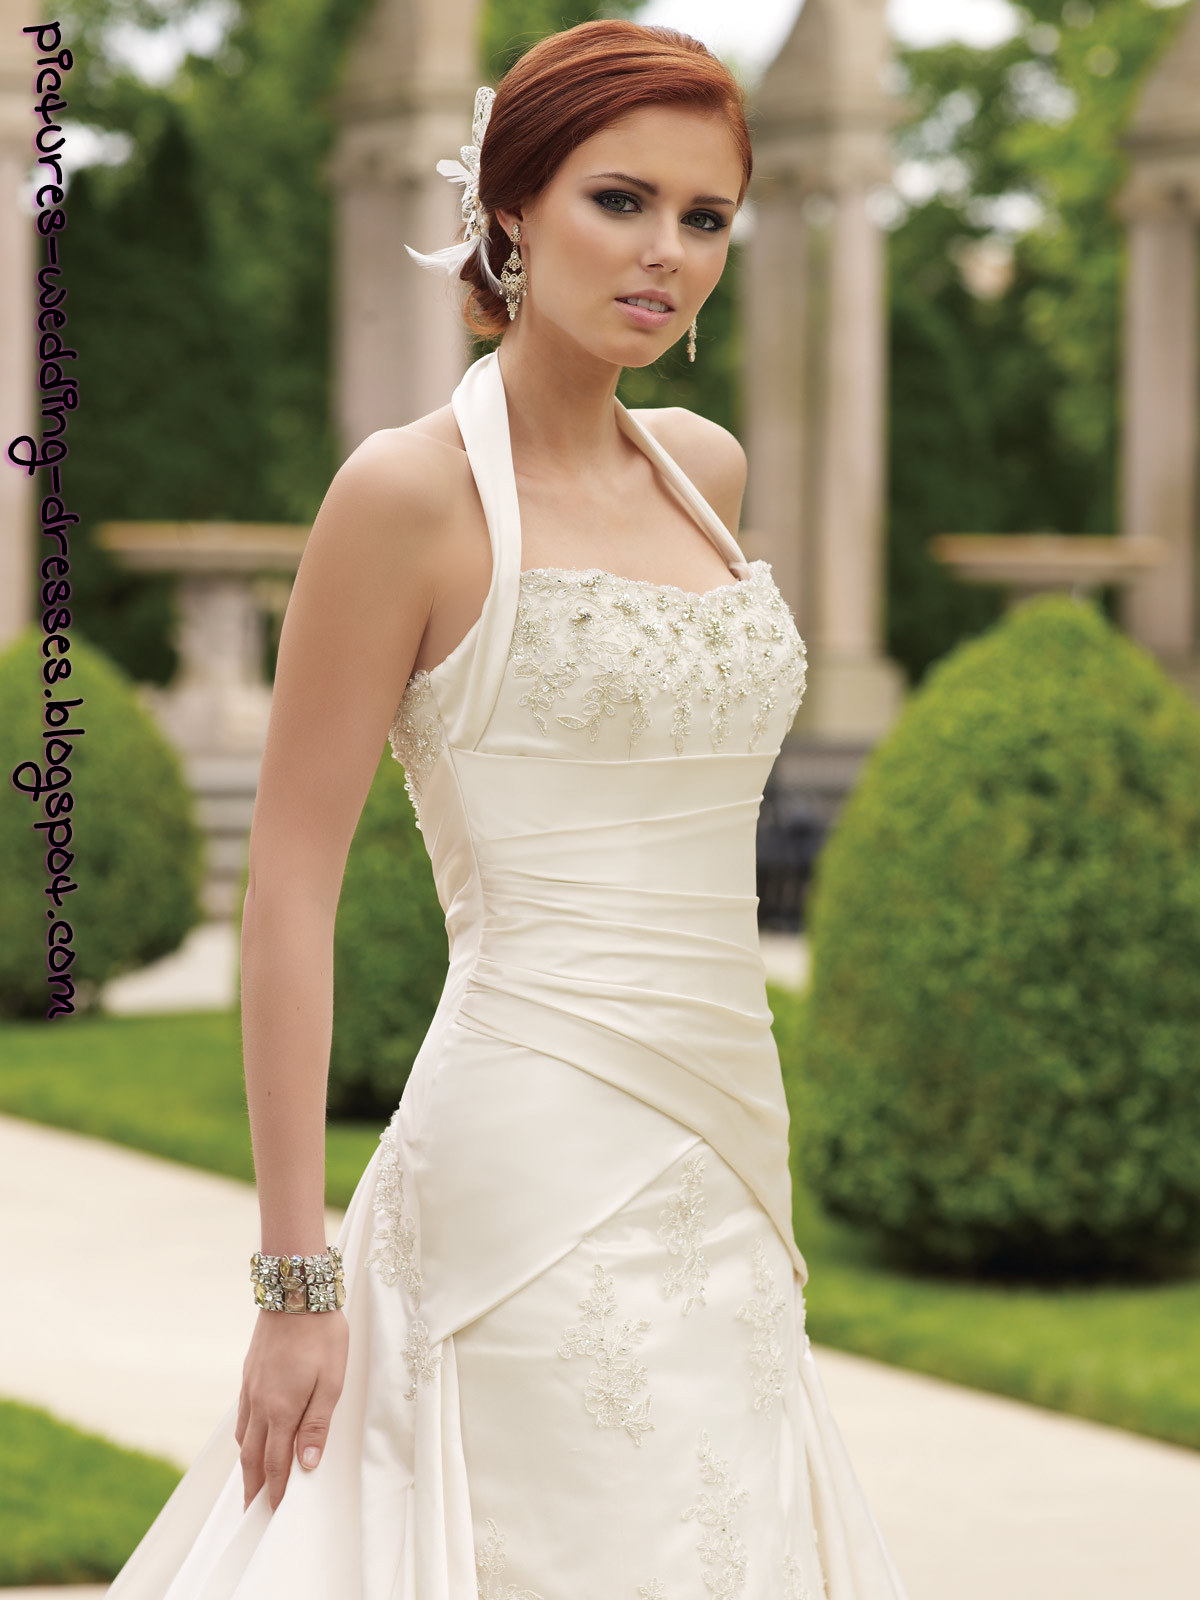 strapless mermaid wedding dresses Bridal Gowns 2011 Fashion Trends, photos wedding gown brides